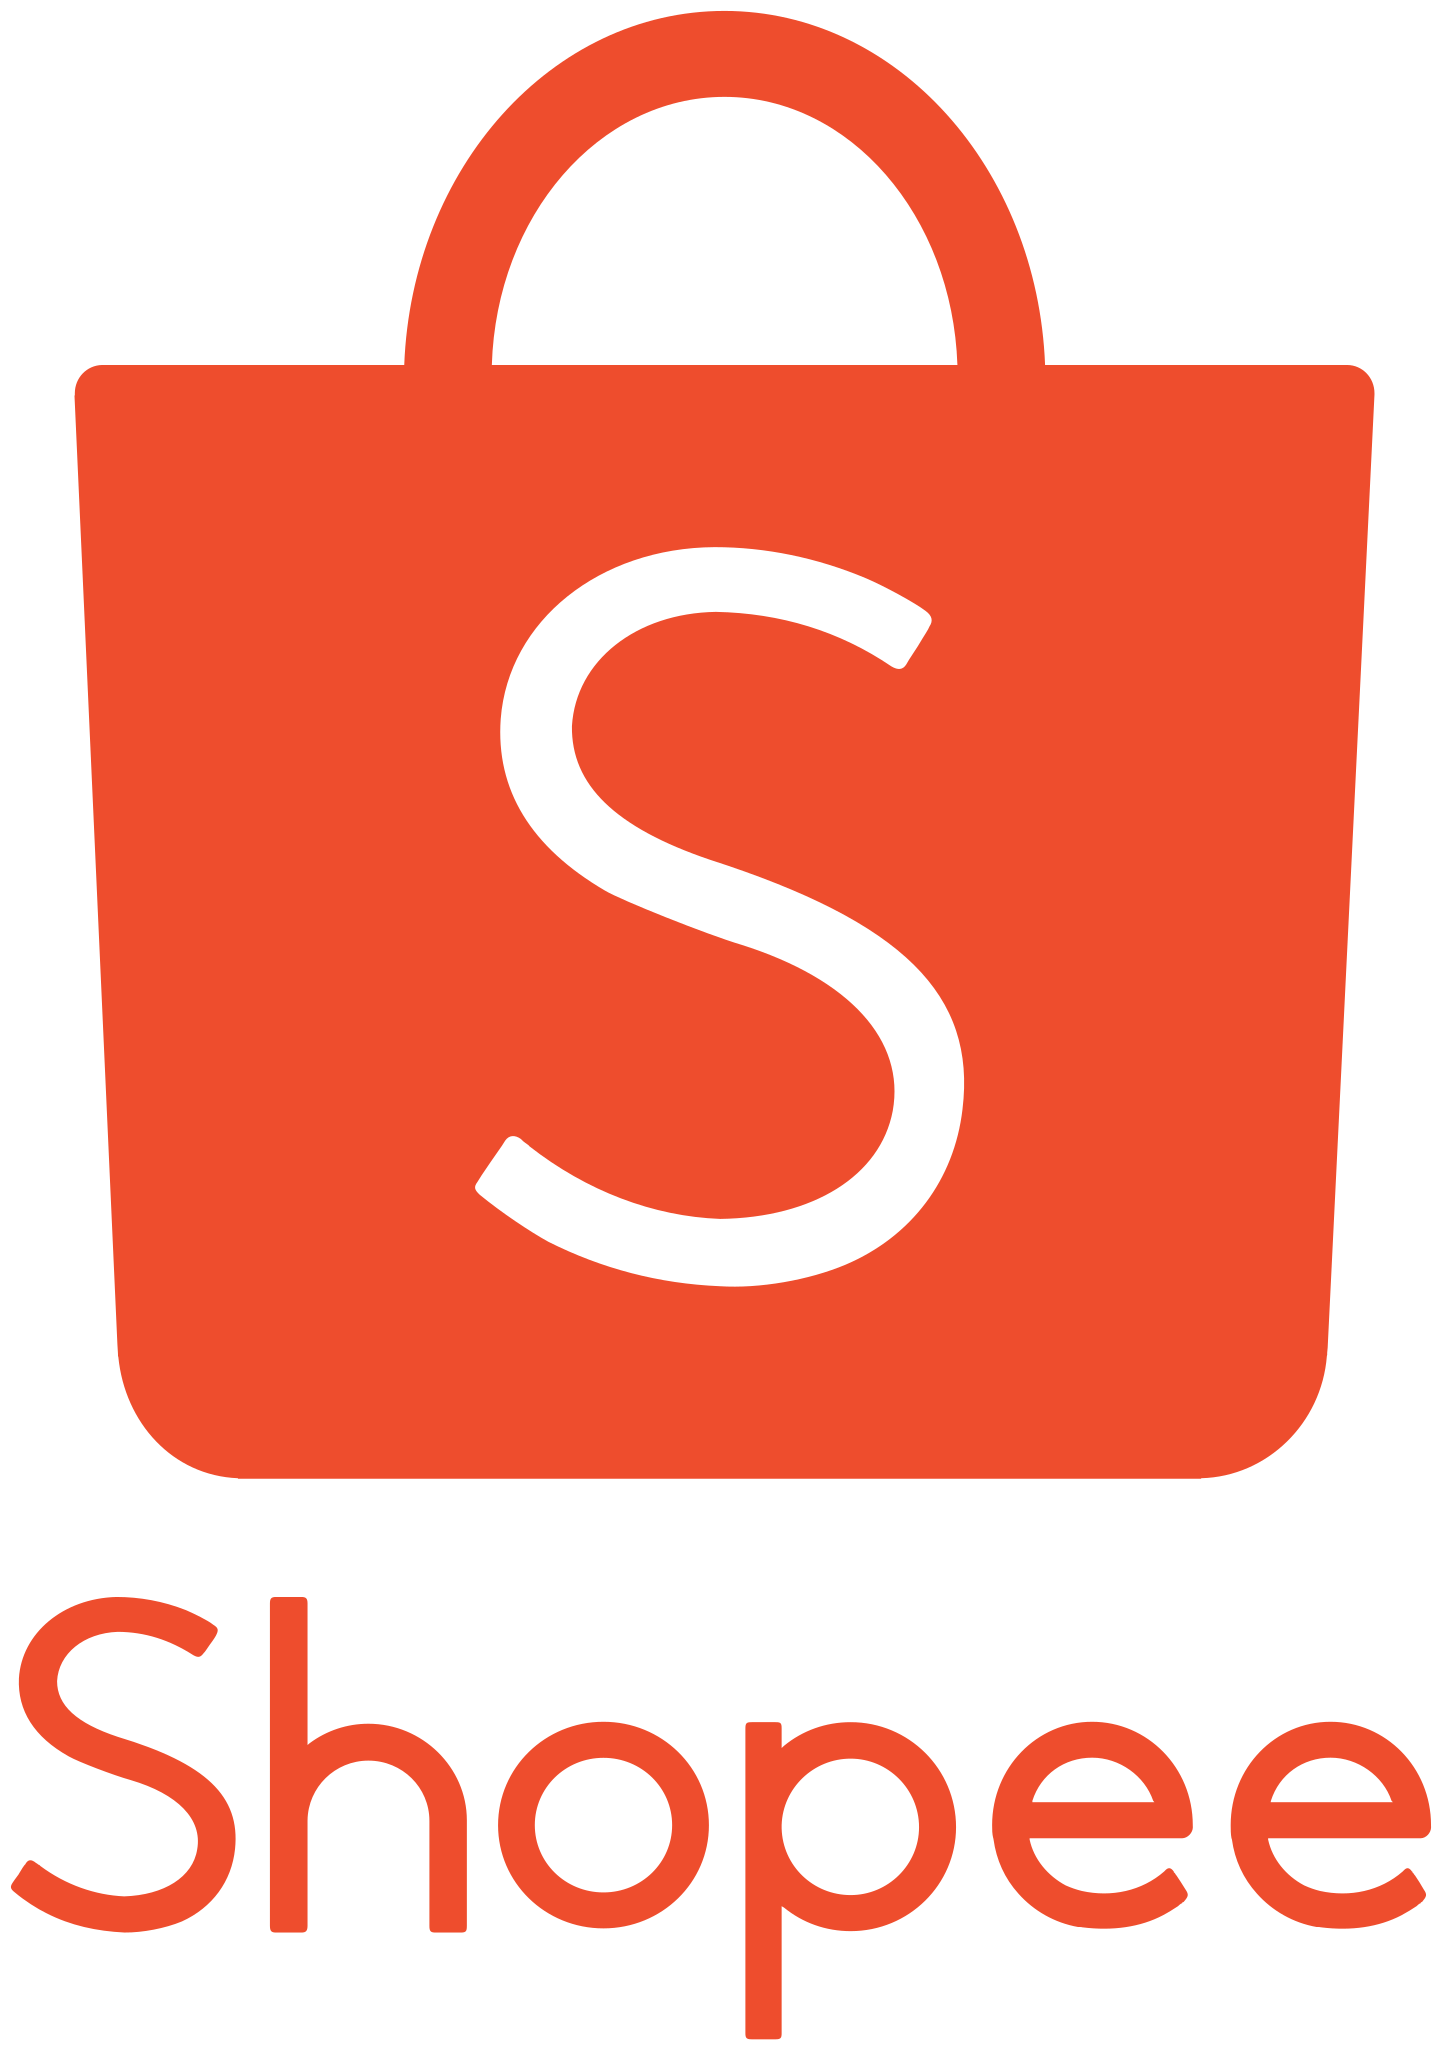 Shopee logo.svg